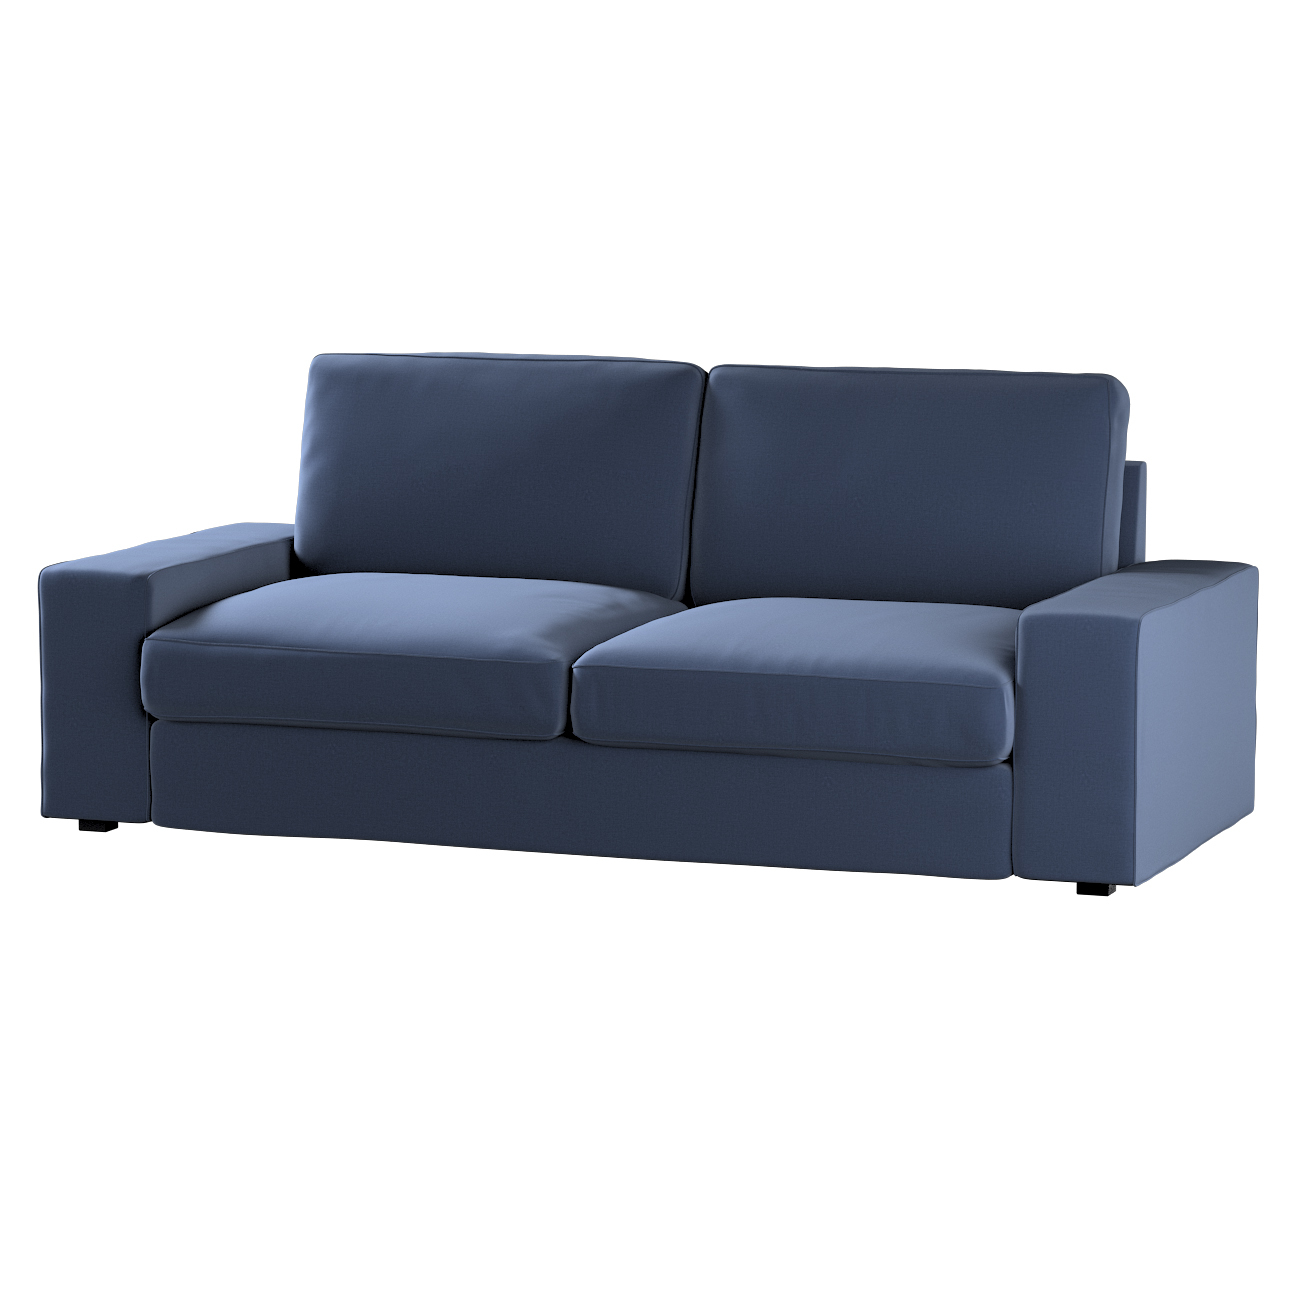 Bezug für Kivik 3-Sitzer Sofa, dunkelblau, Bezug für Sofa Kivik 3-Sitzer, I günstig online kaufen